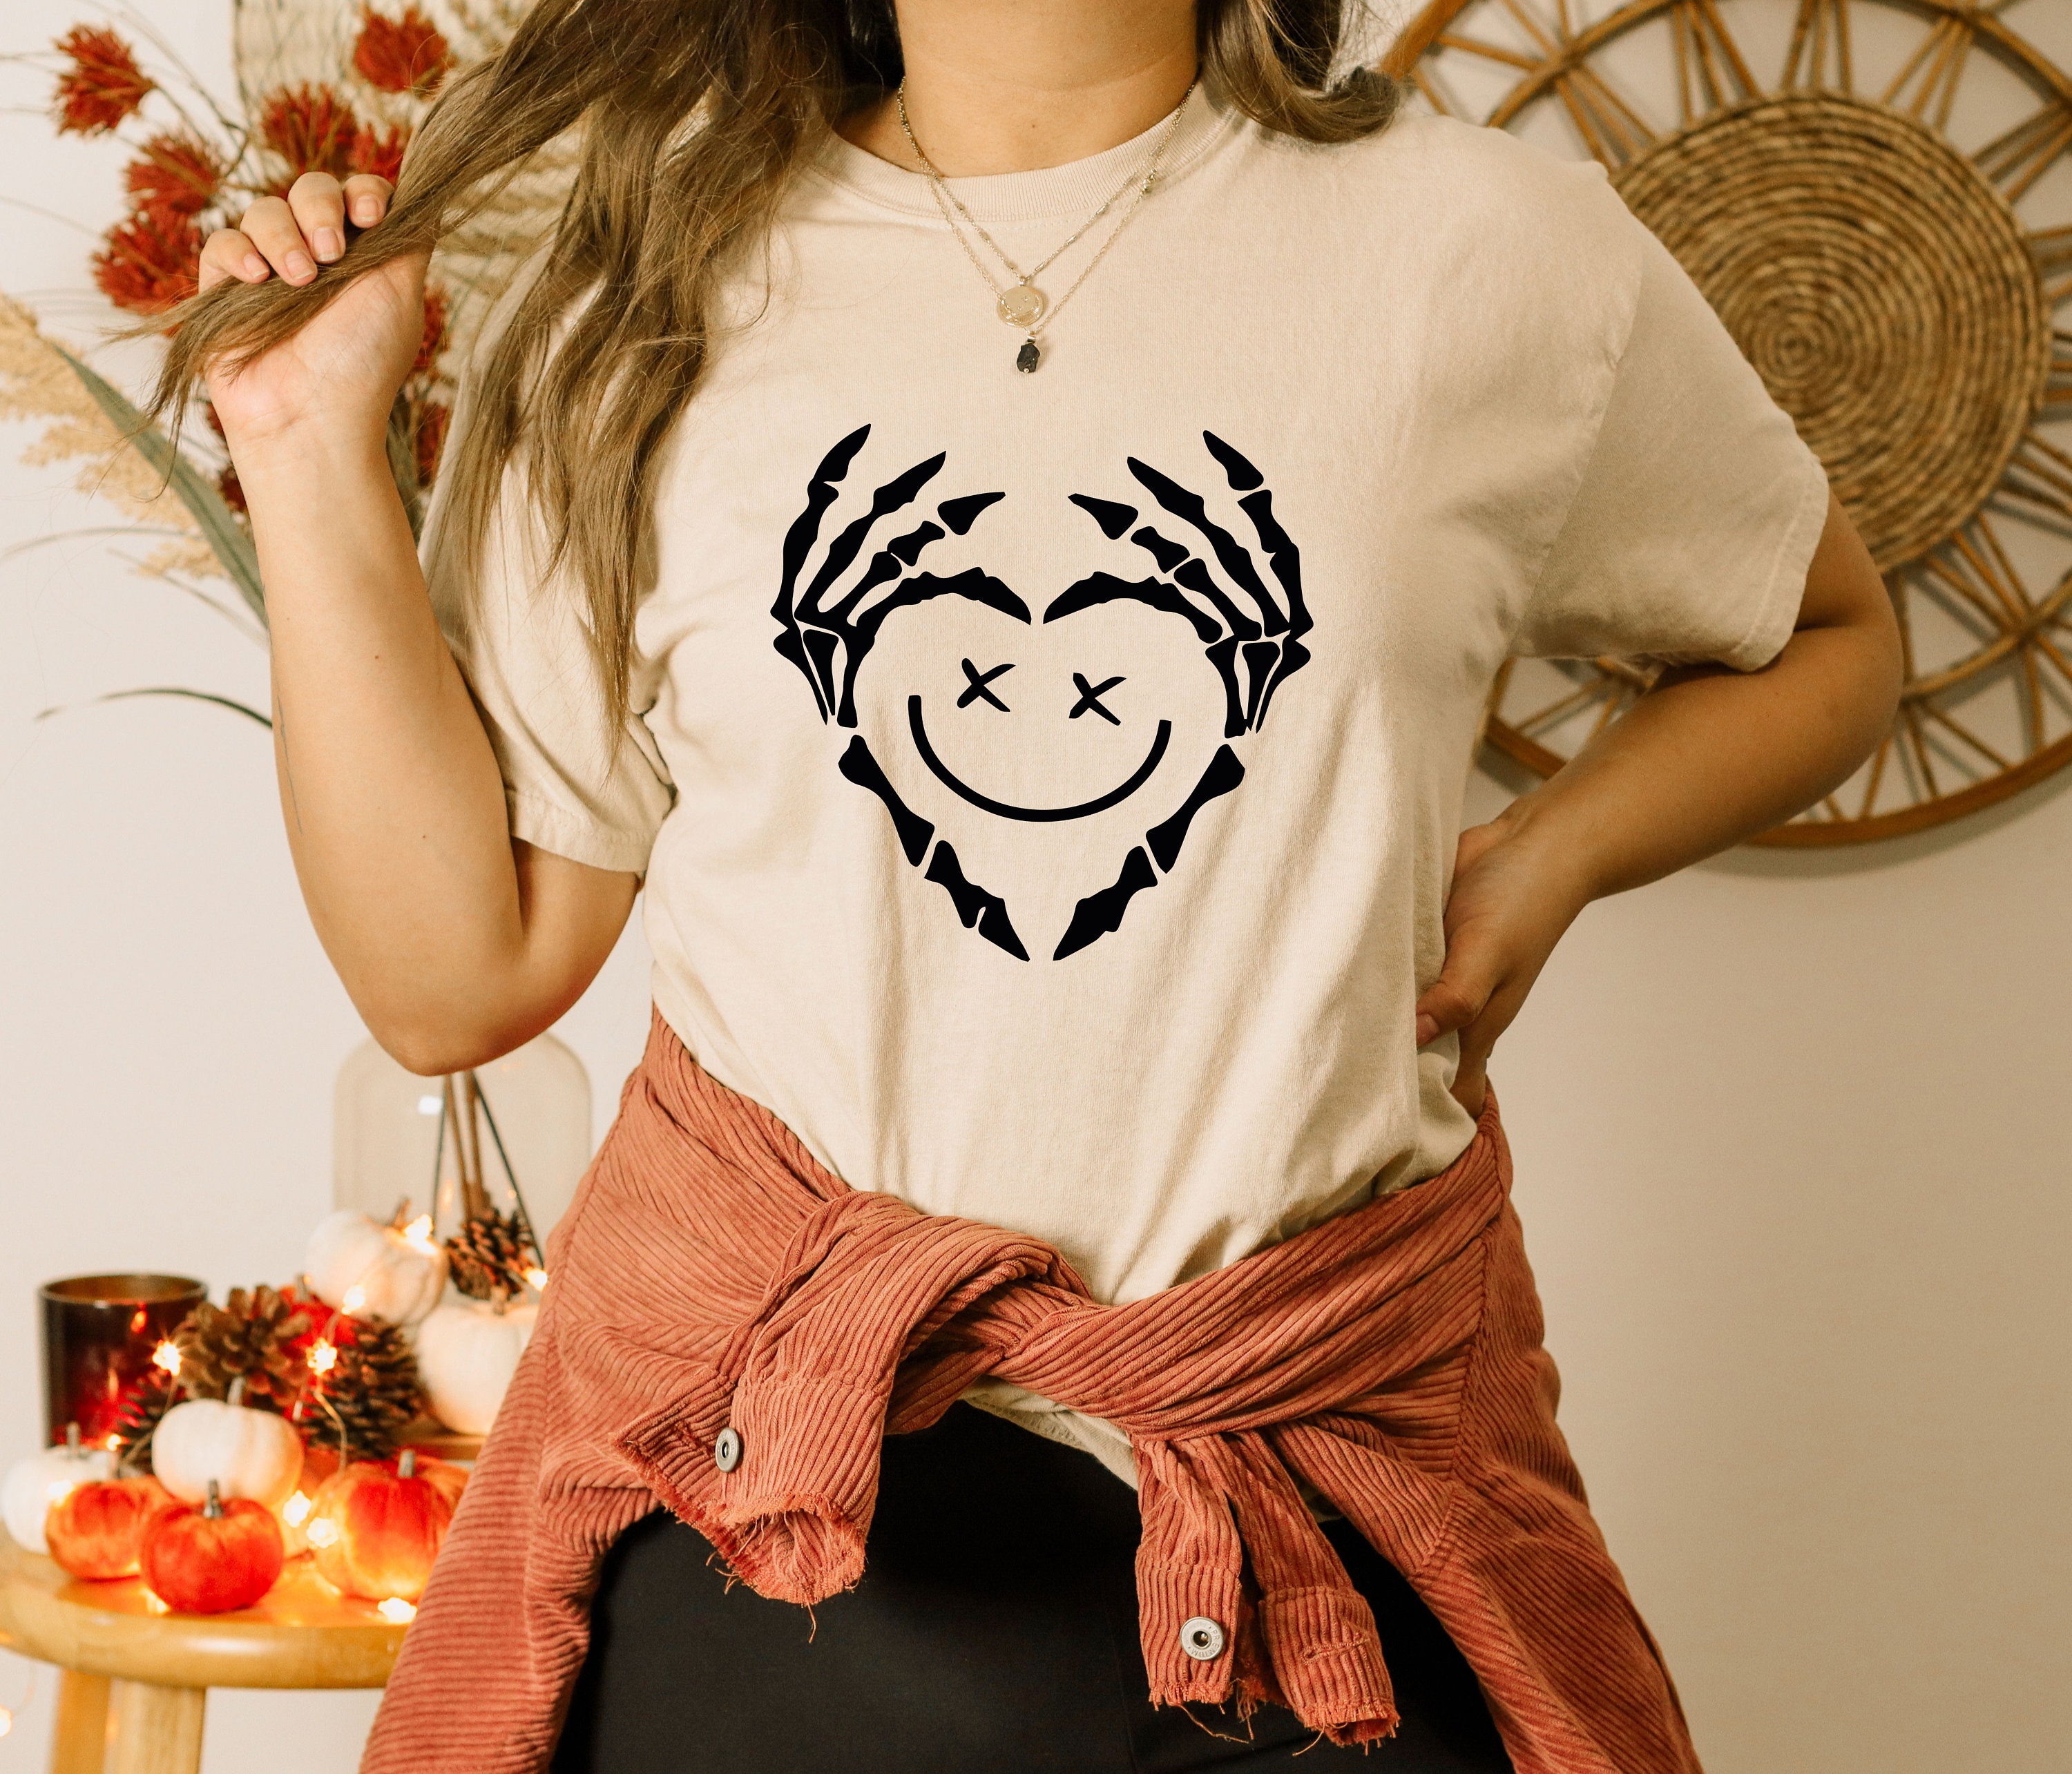 Discover Skeleton Hands Heart Shirt, Smiley Face Shirt, Cute Smile Shirt, Funny Couple Shirt, Halloween T-Shirt, Spooky Shirt, Valentine Shirt